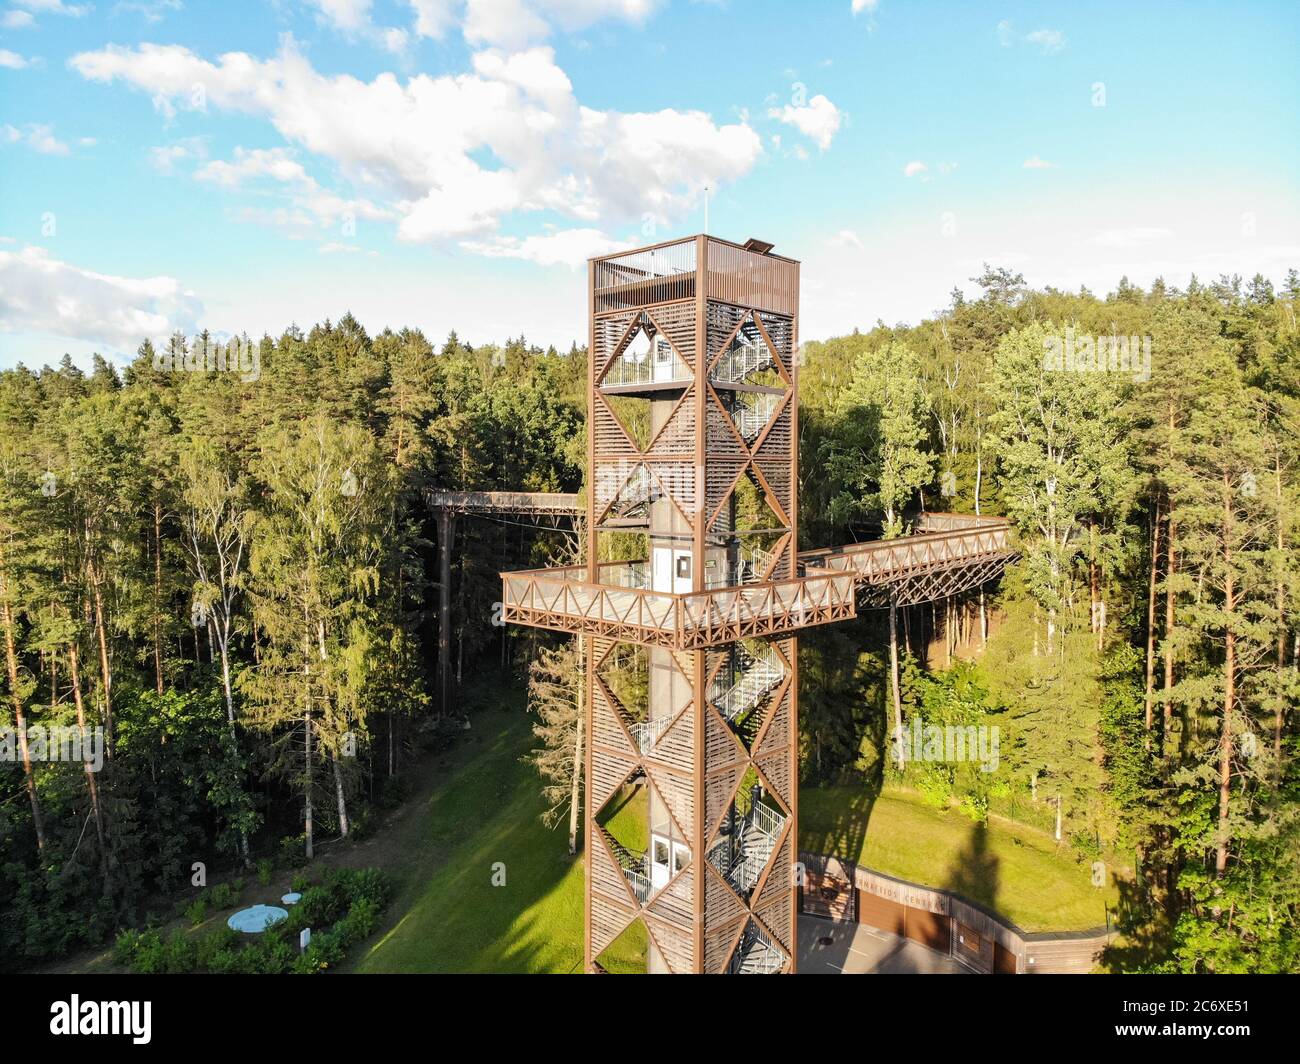 The treetop walking path watchtower in laju takas, Anyksciai, Lithuania Stock Photo